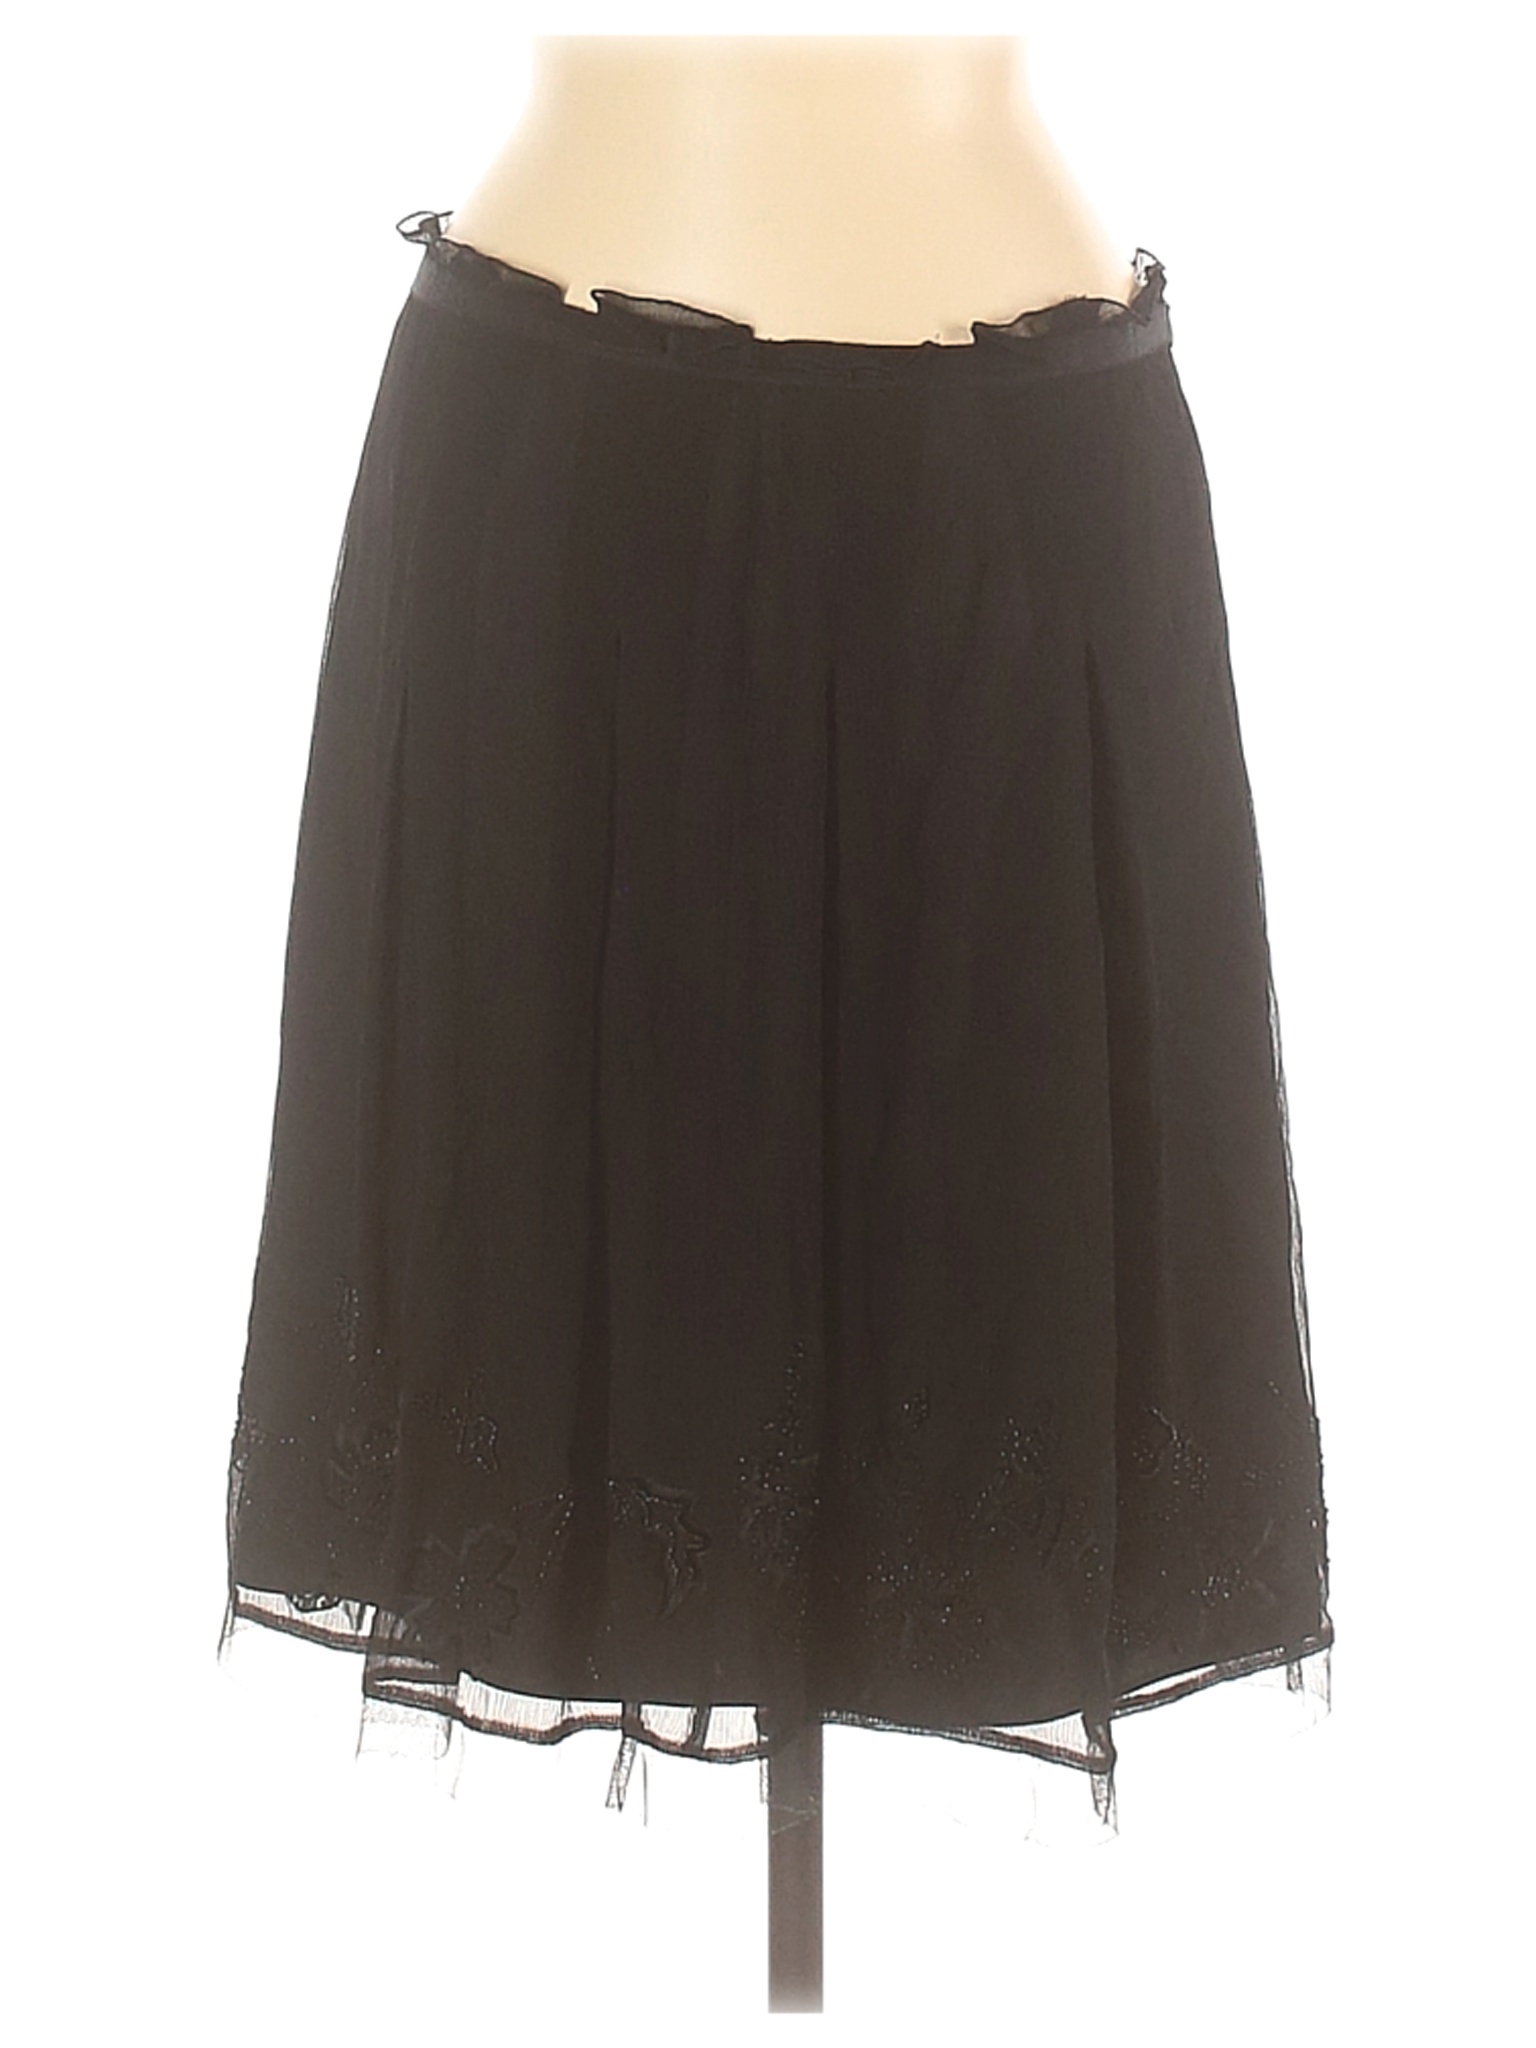 Gianni Bini Women Brown Silk Skirt 8 | eBay